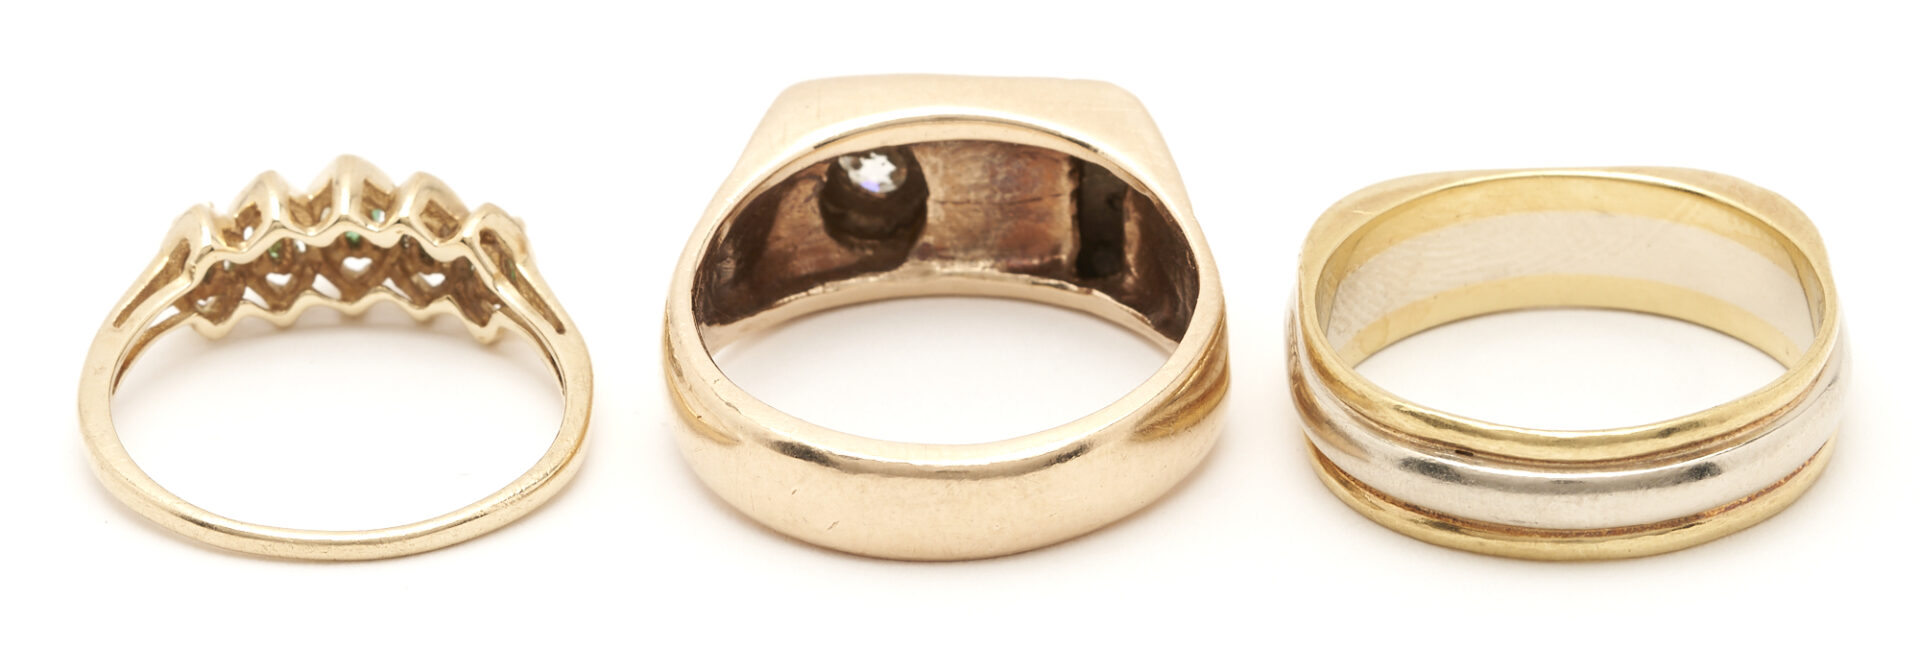 Lot 413: 3 Gold & Gemstone Rings